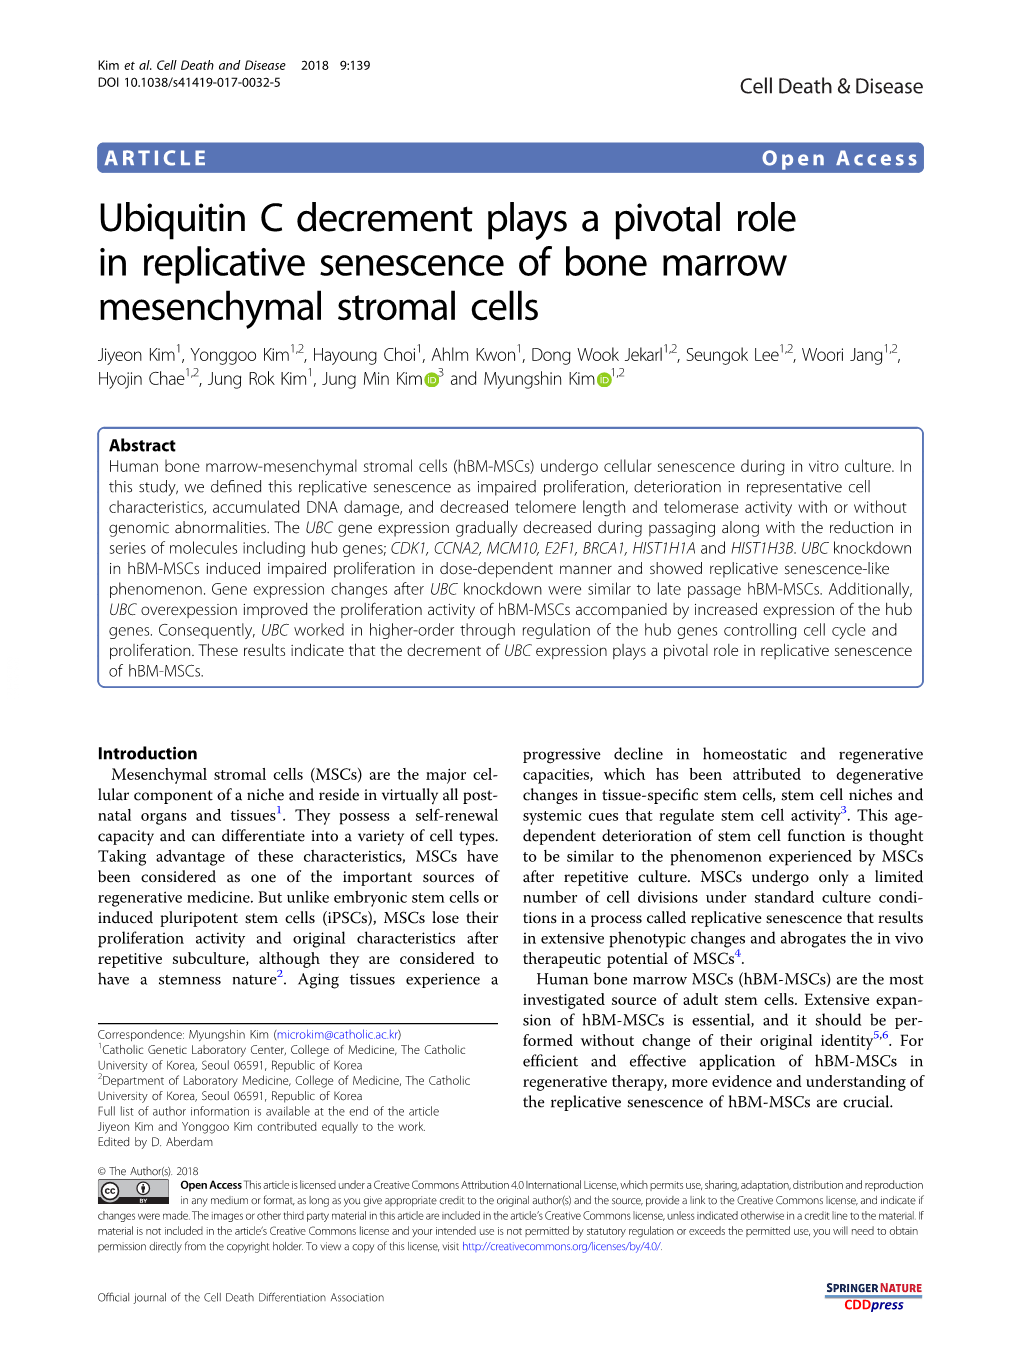 Ubiquitin C Decrement Plays a Pivotal Role in Replicative Senescence of Bone Marrow Mesenchymal Stromal Cells